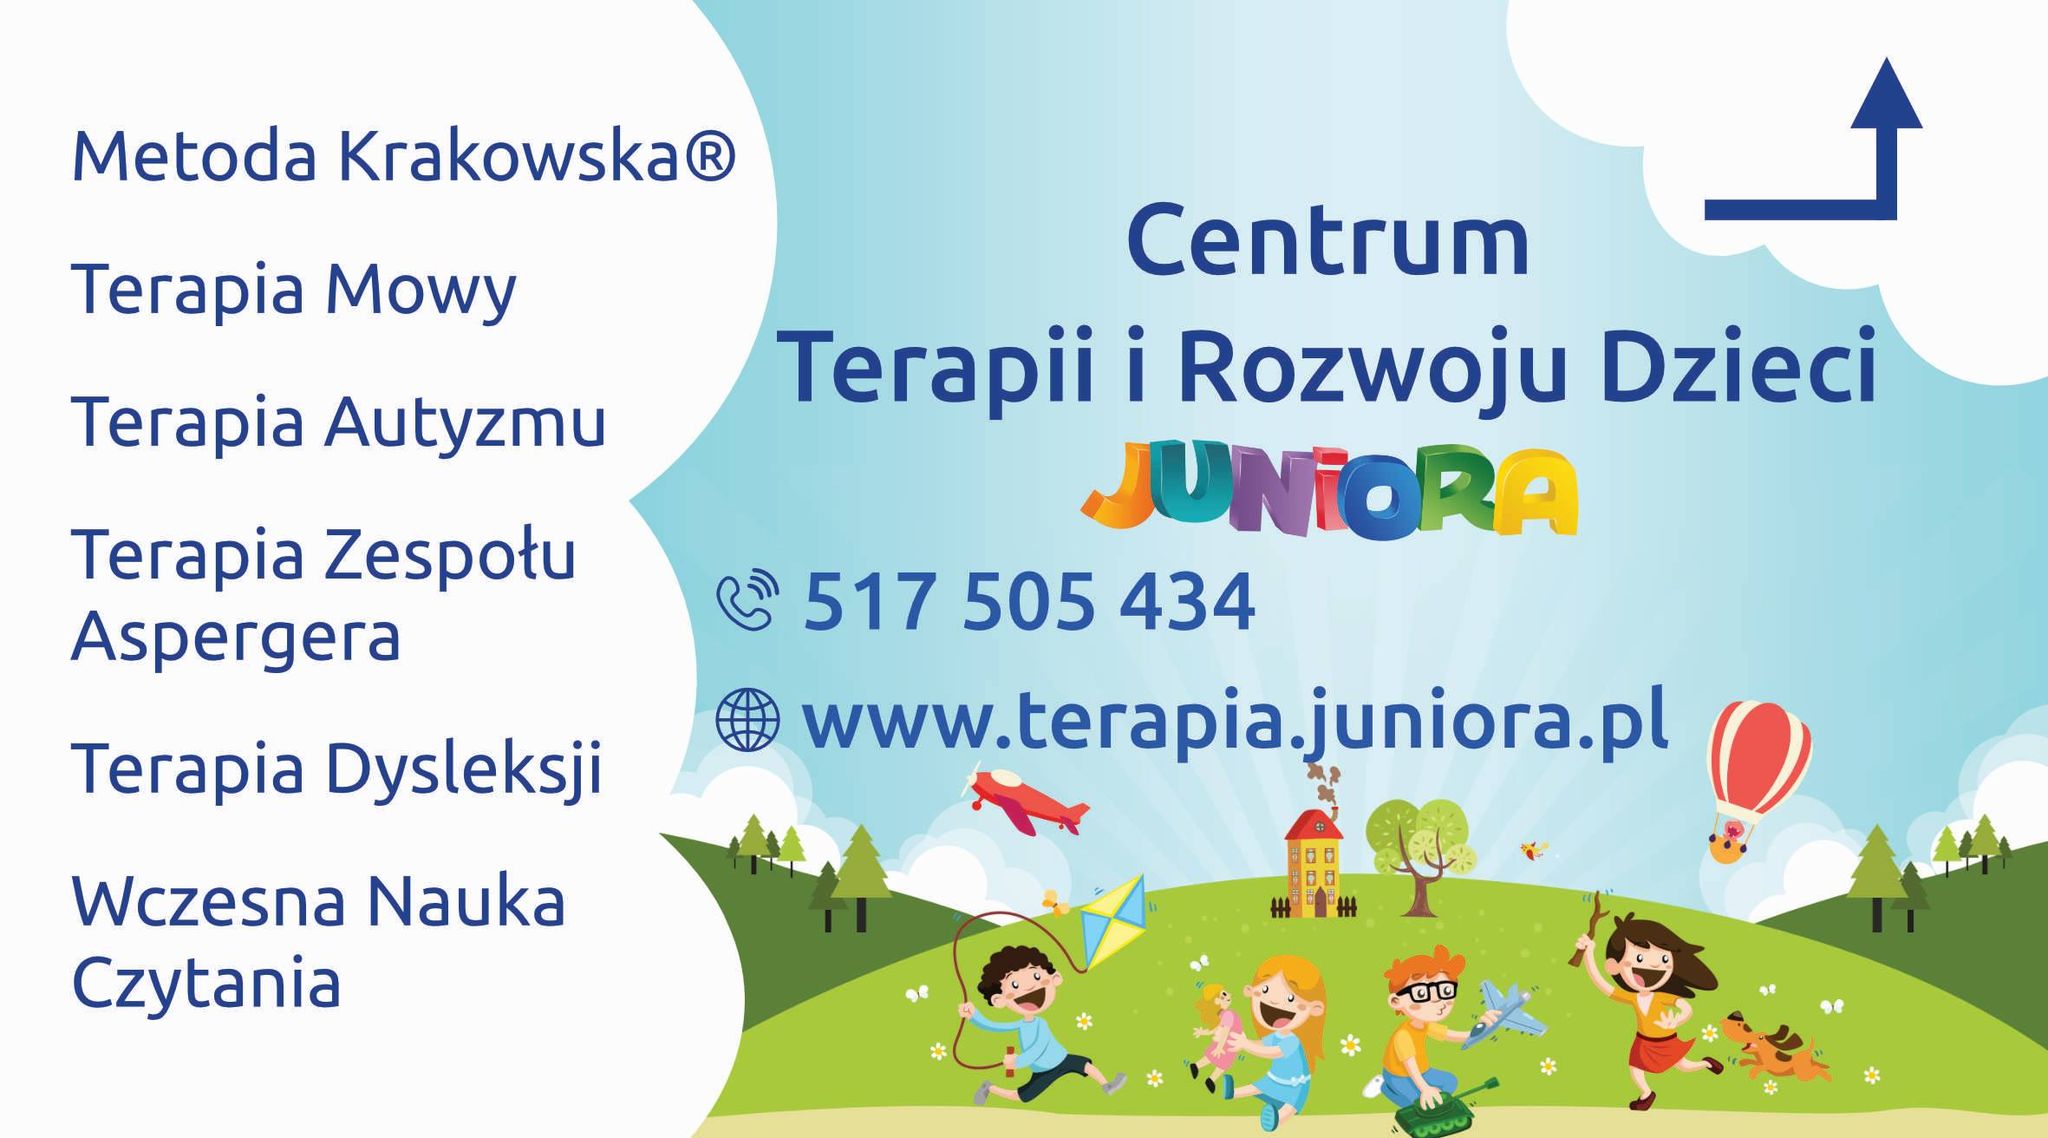 Centrum Terapii i Rozwoju Dzieci Juniora